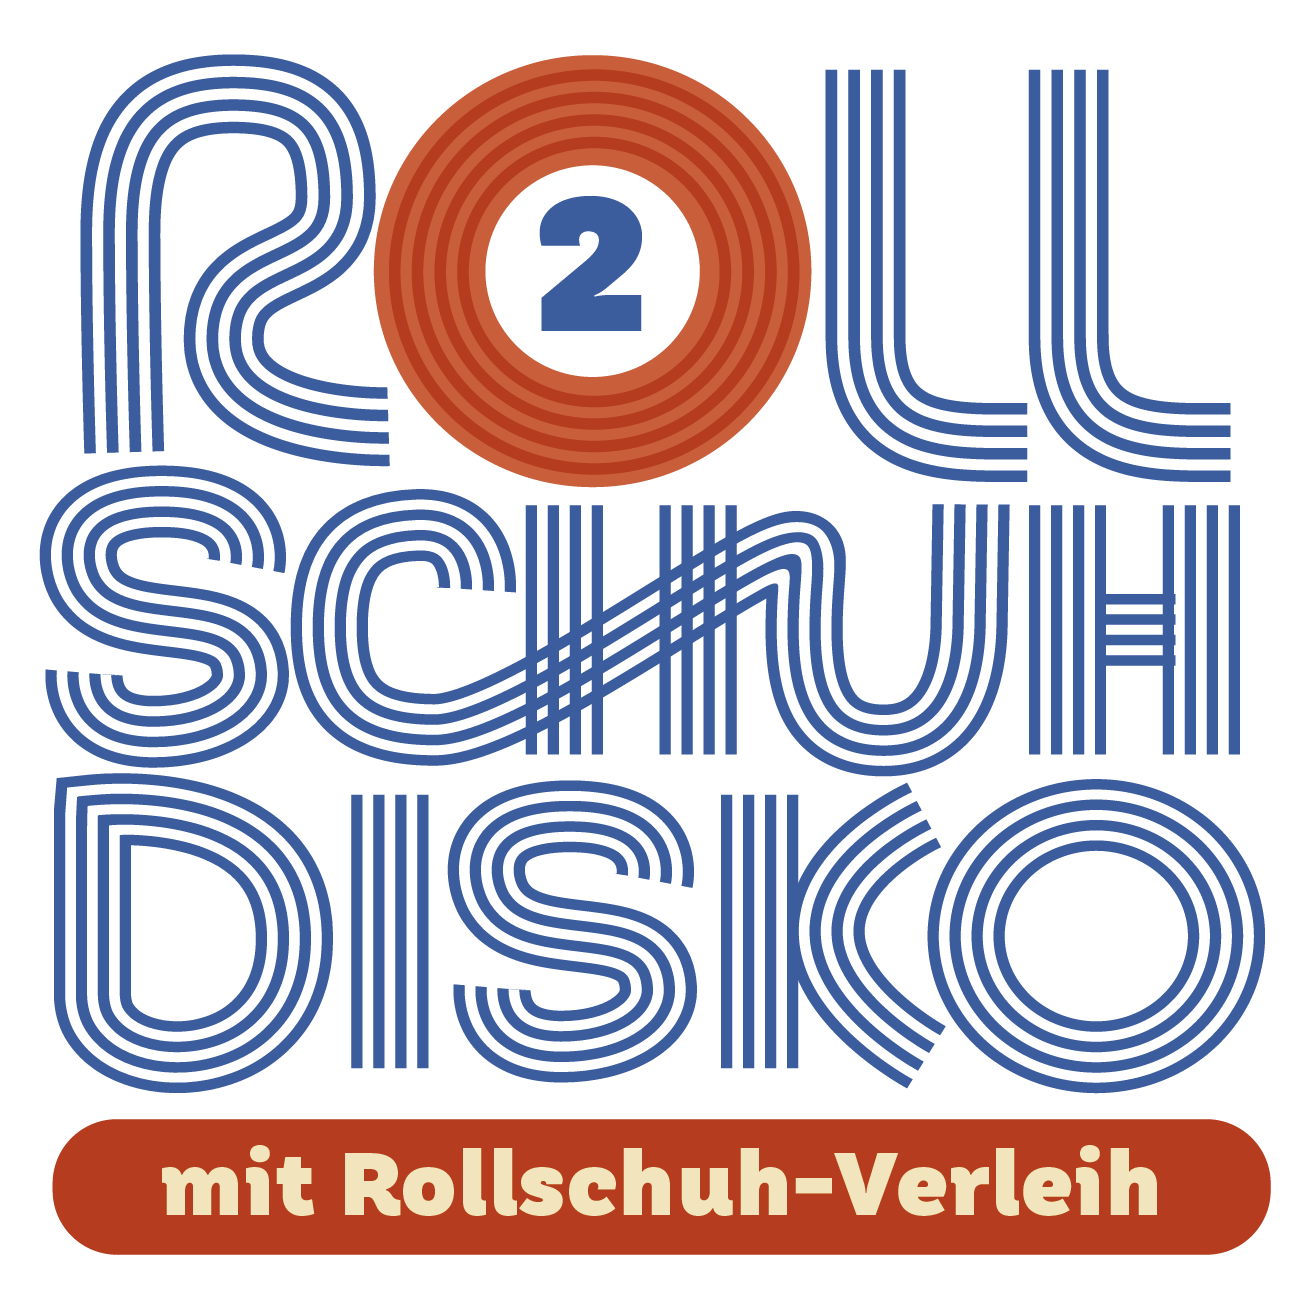 Rollschuhdisko Schwerin